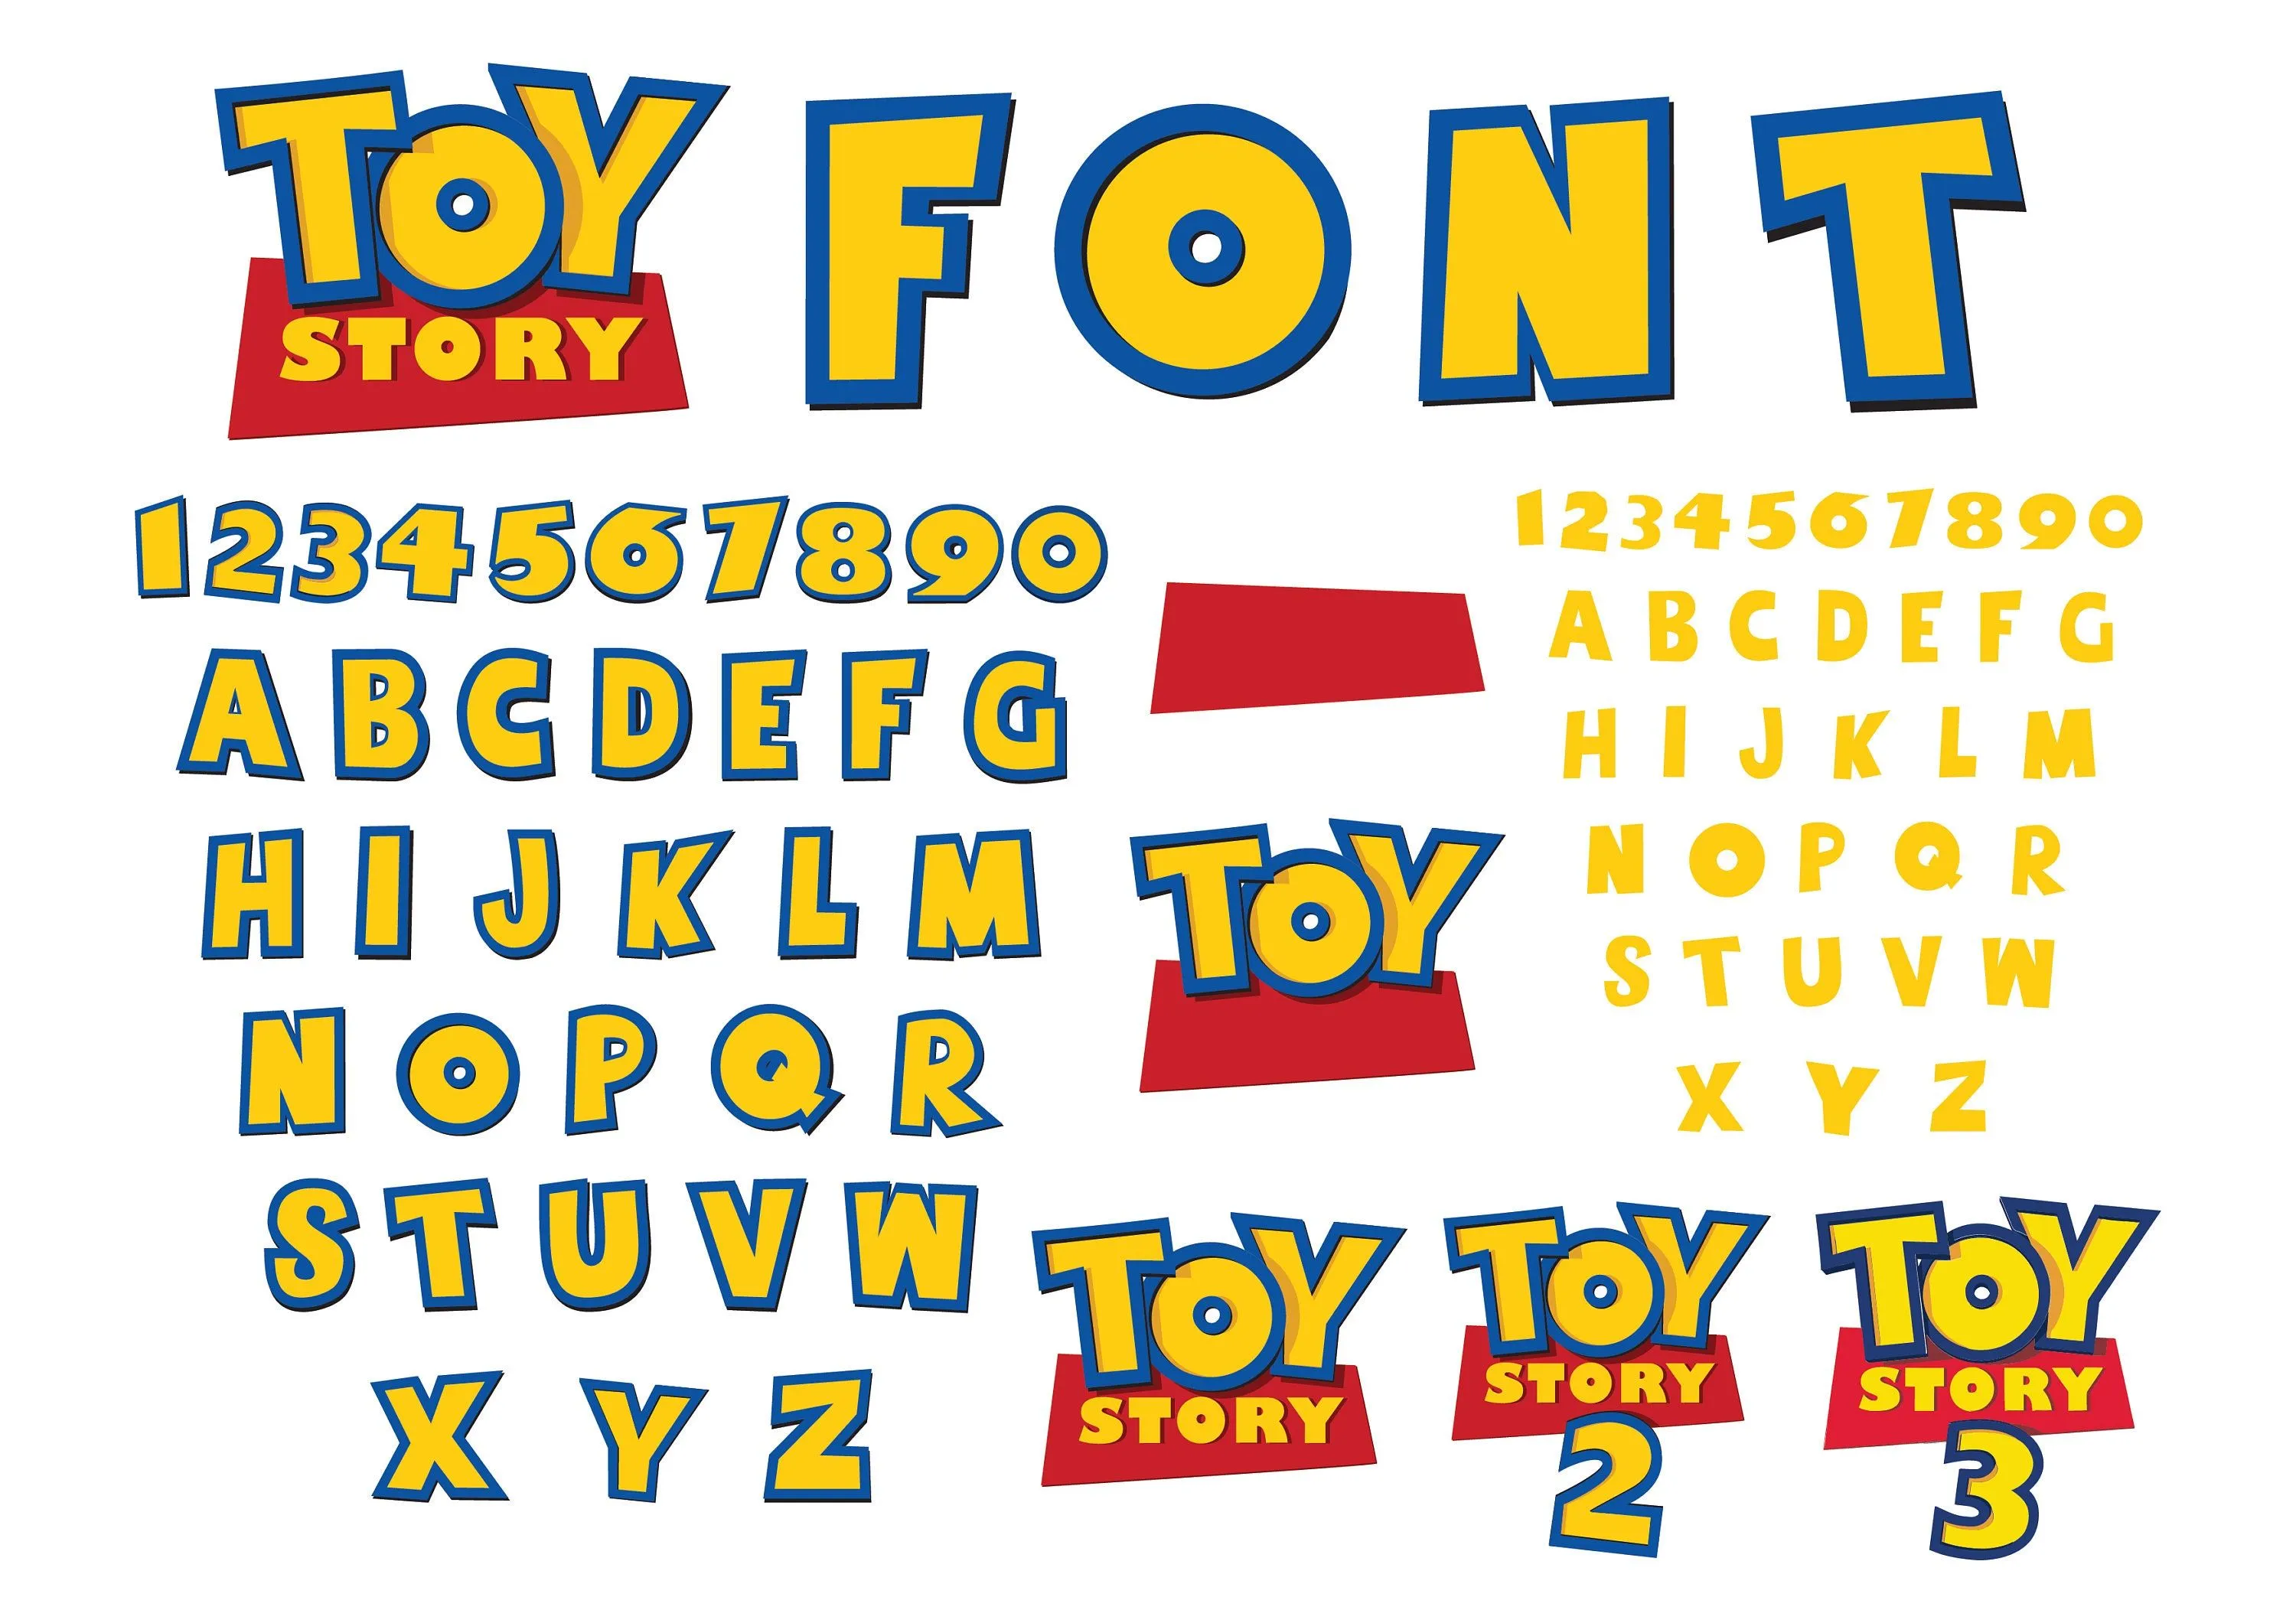 Toy story font for cricut - Etsy México